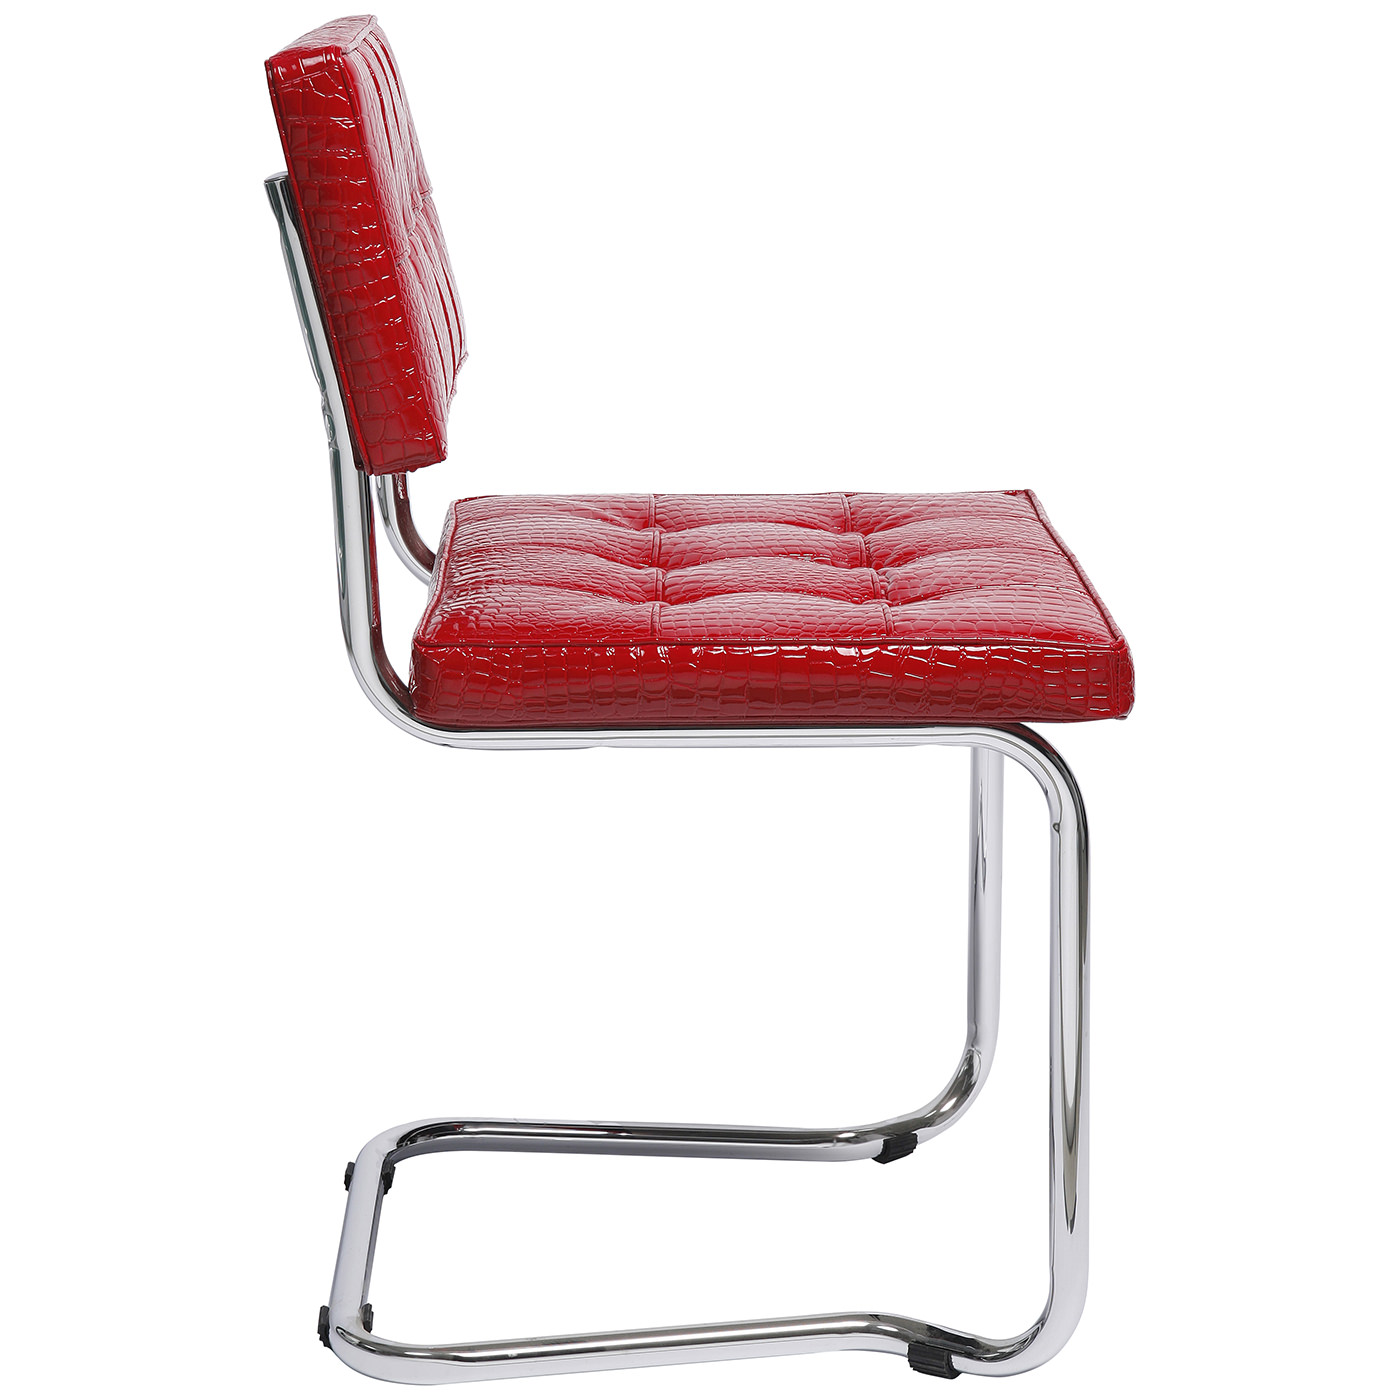 HI 1353 0019 – Swinger Chair Expo Shiny Croco Red (3)